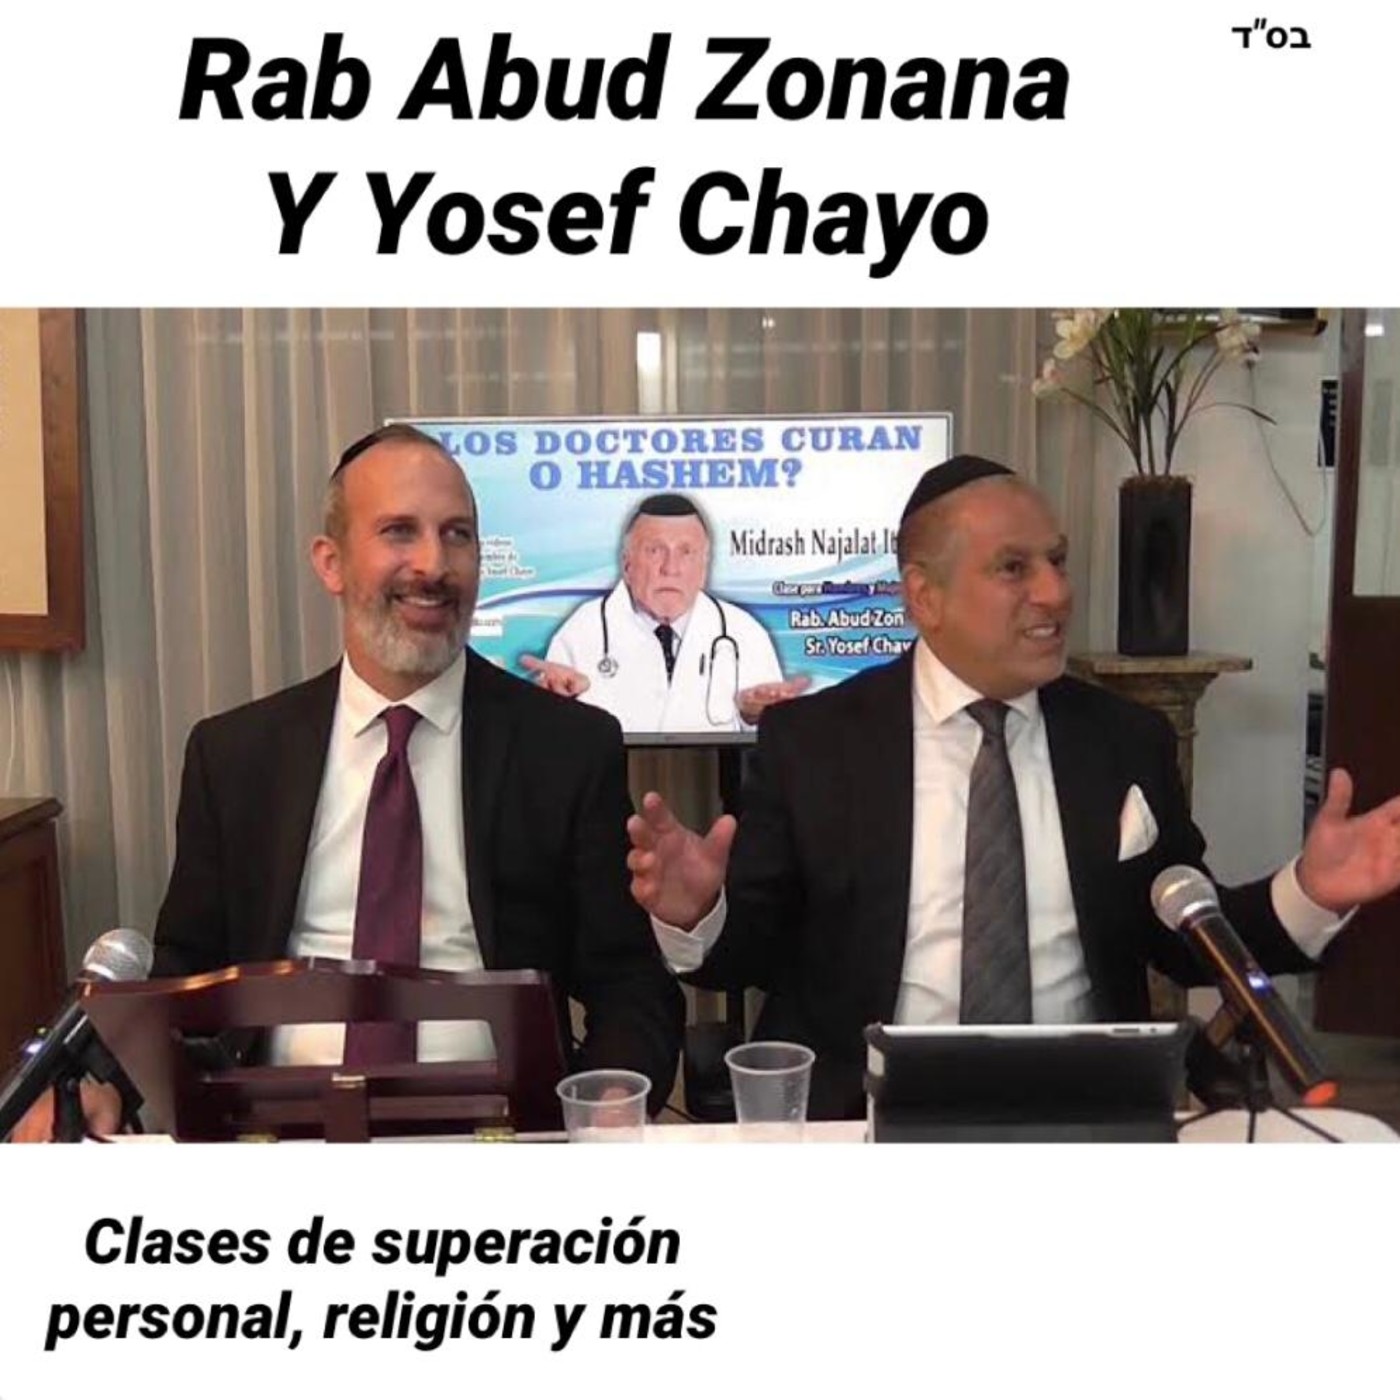 Rab Abud Zonana Y Yosef Chayo